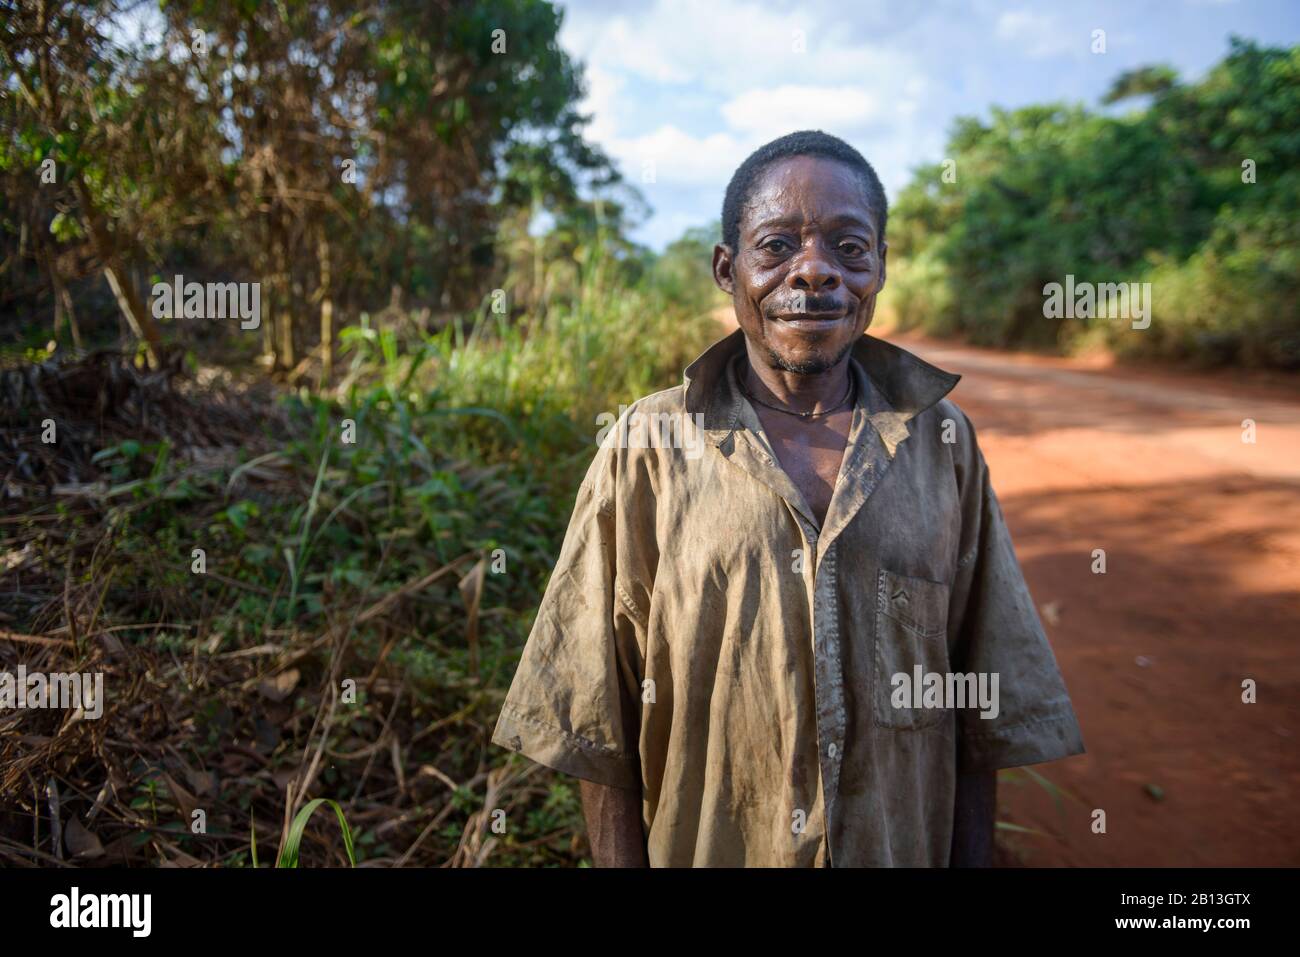 Congolese man,Democratic Republic of Congo,Africa Stock Photo